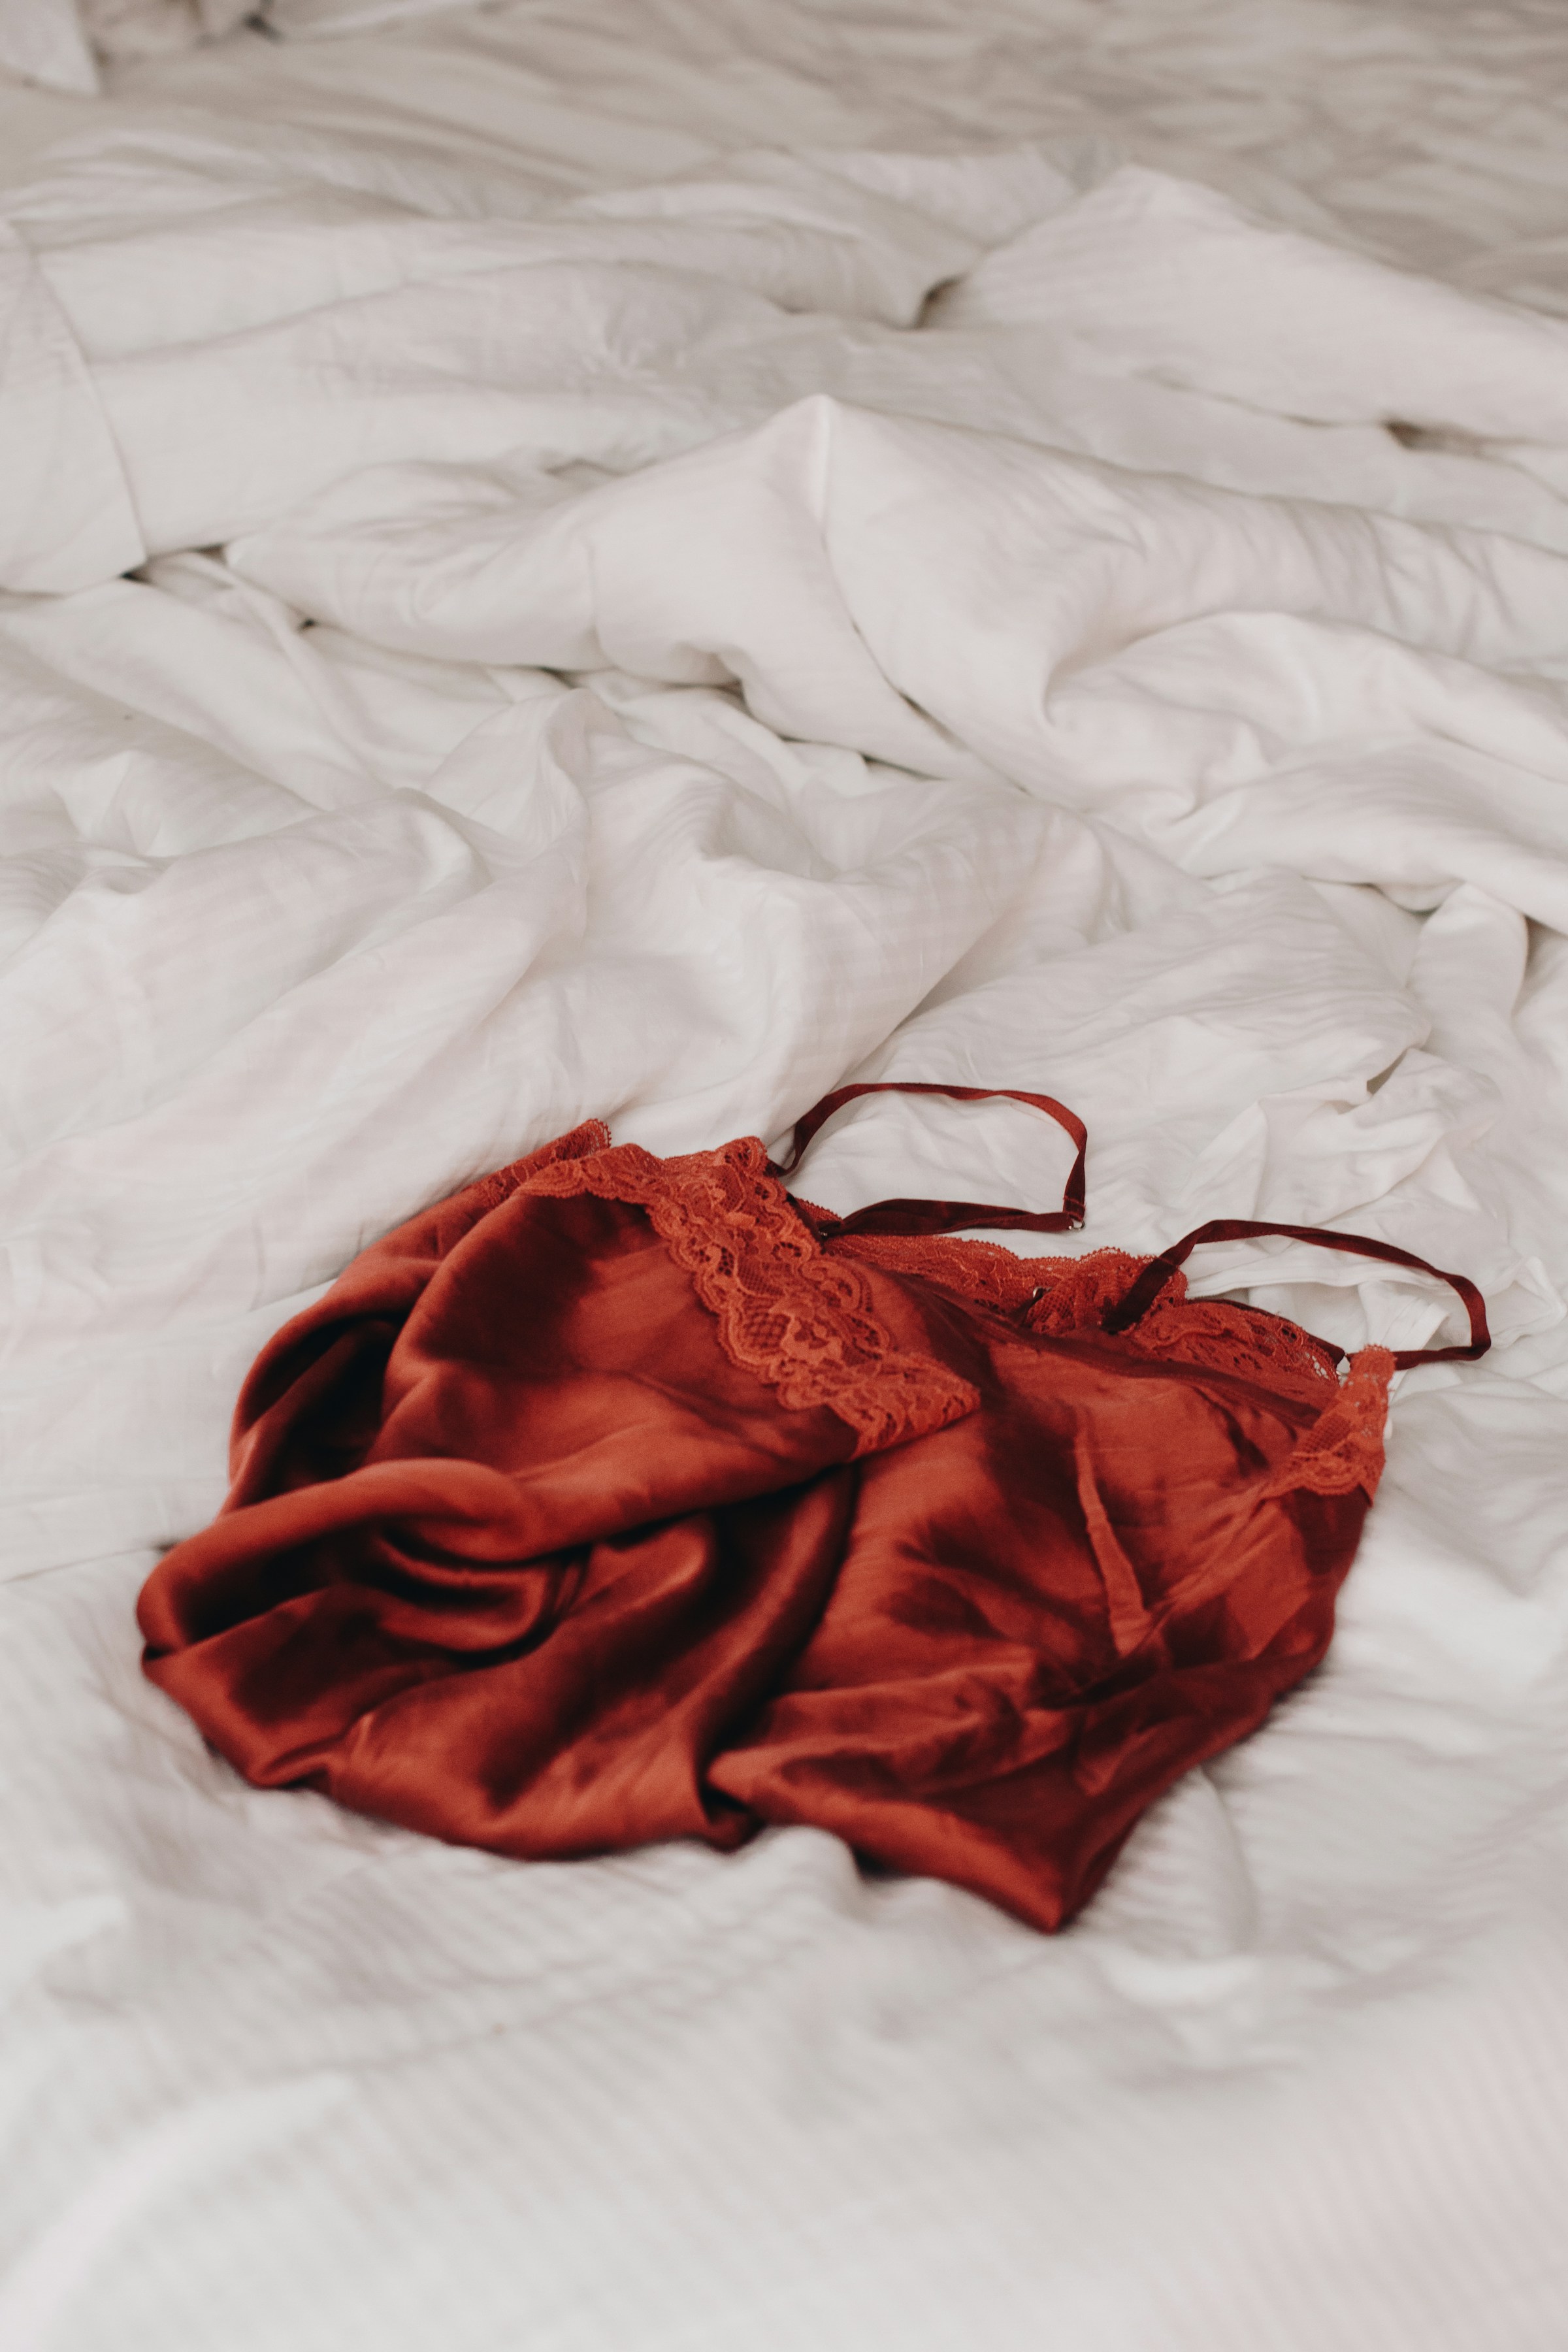 Lencería de encaje rojo tendida sobre sábanas de lino blanco | Foto: Unsplash